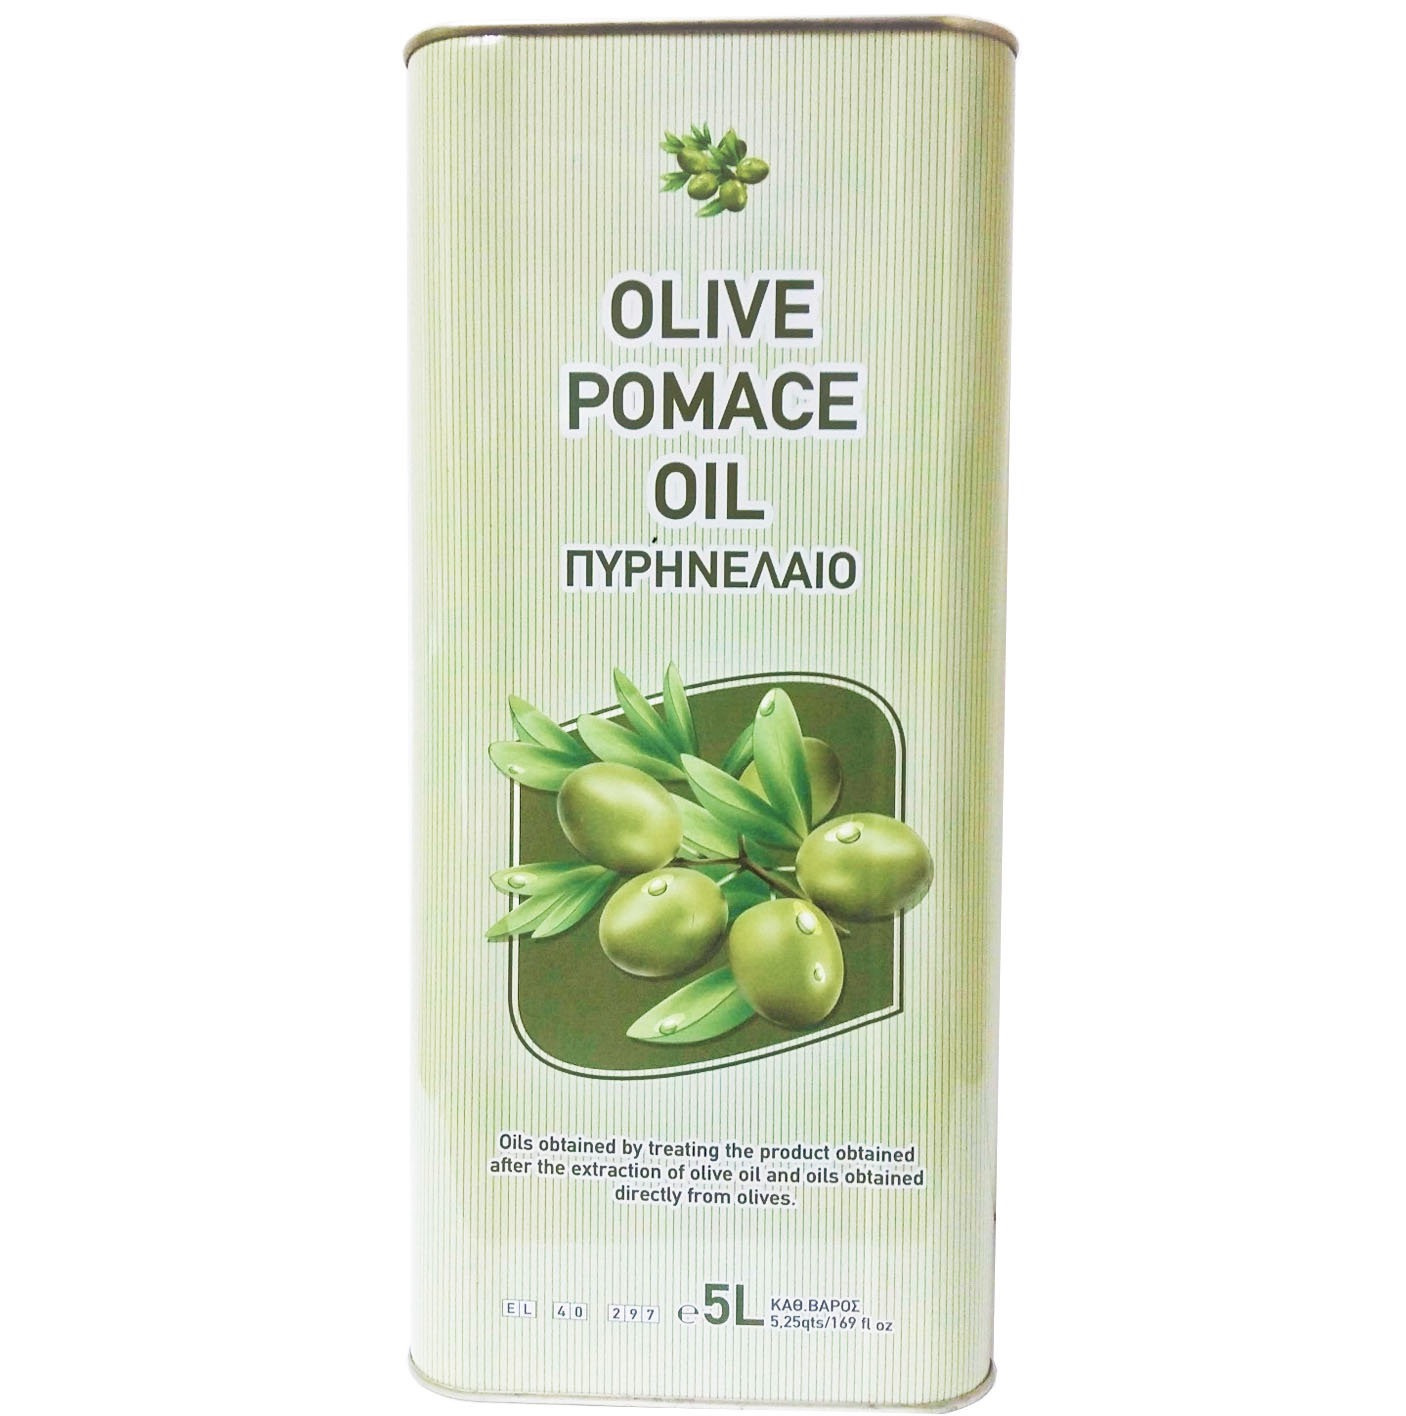 DELPHI оливковое масло Pomace 5л жесть. DELPHI оливковое масло Pomace 1л пластик. Cretan Mill масло оливковое.